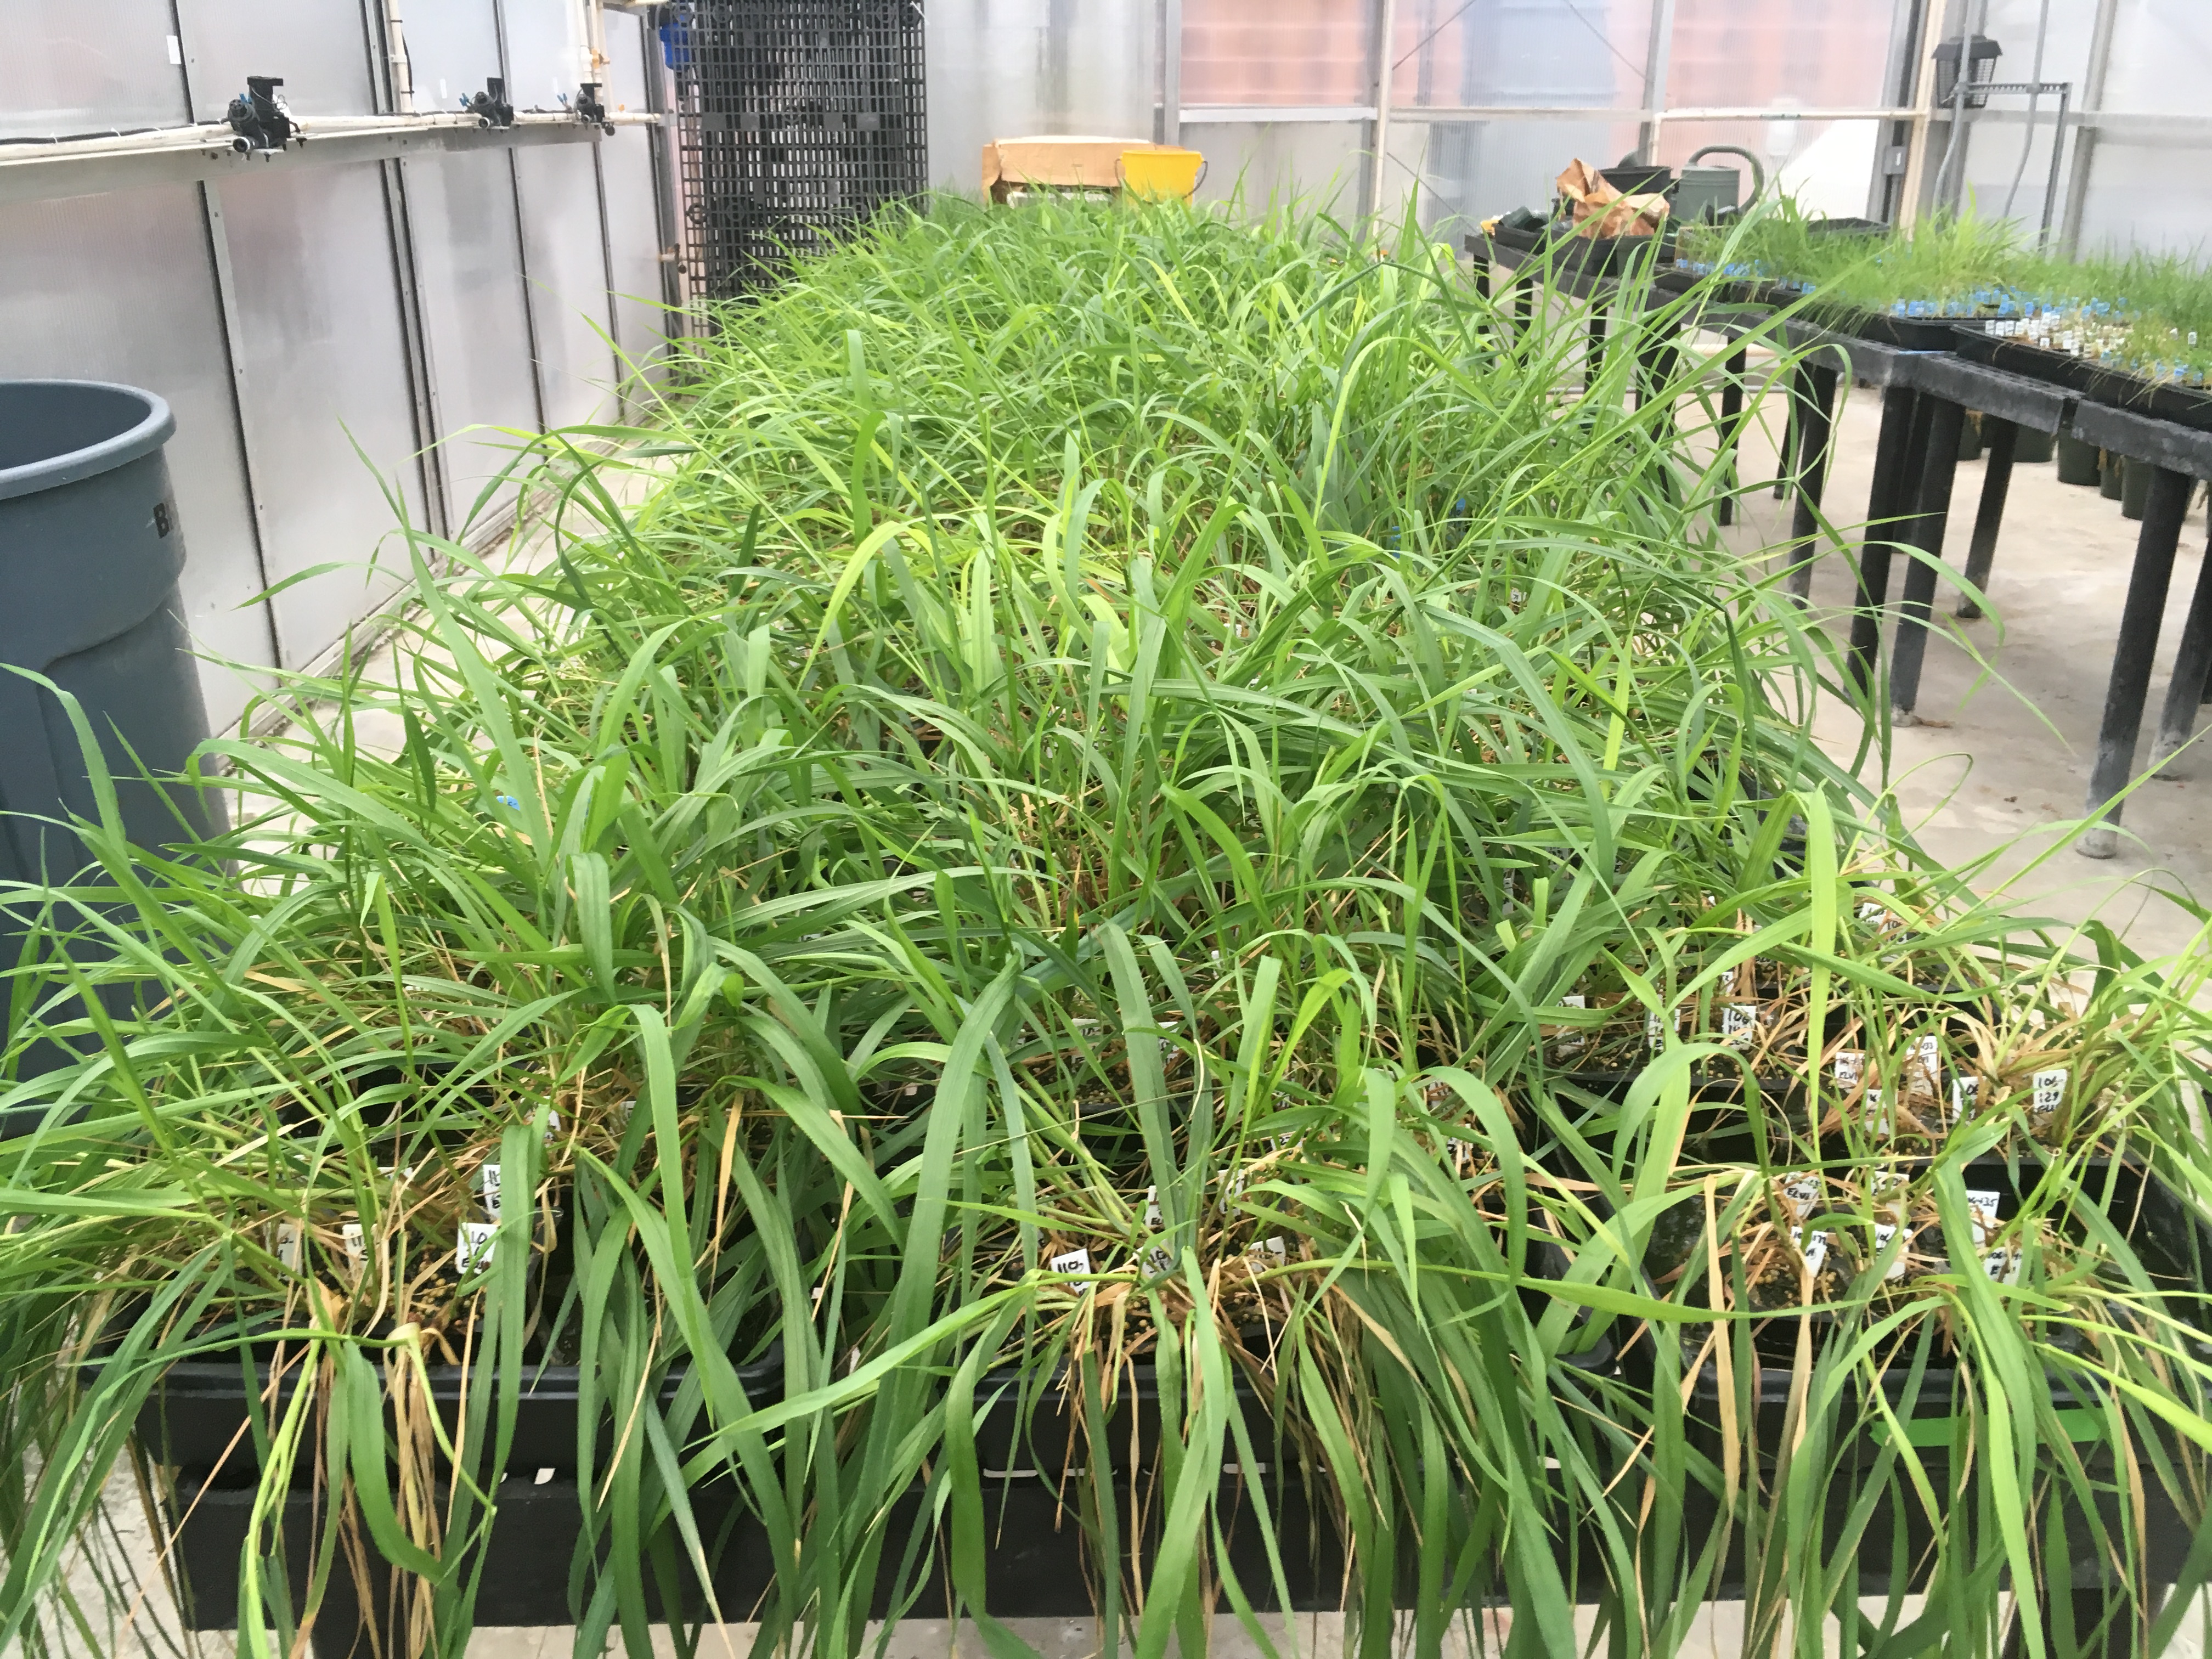 Seedlings grown in the greenhouse for transplanting across the range